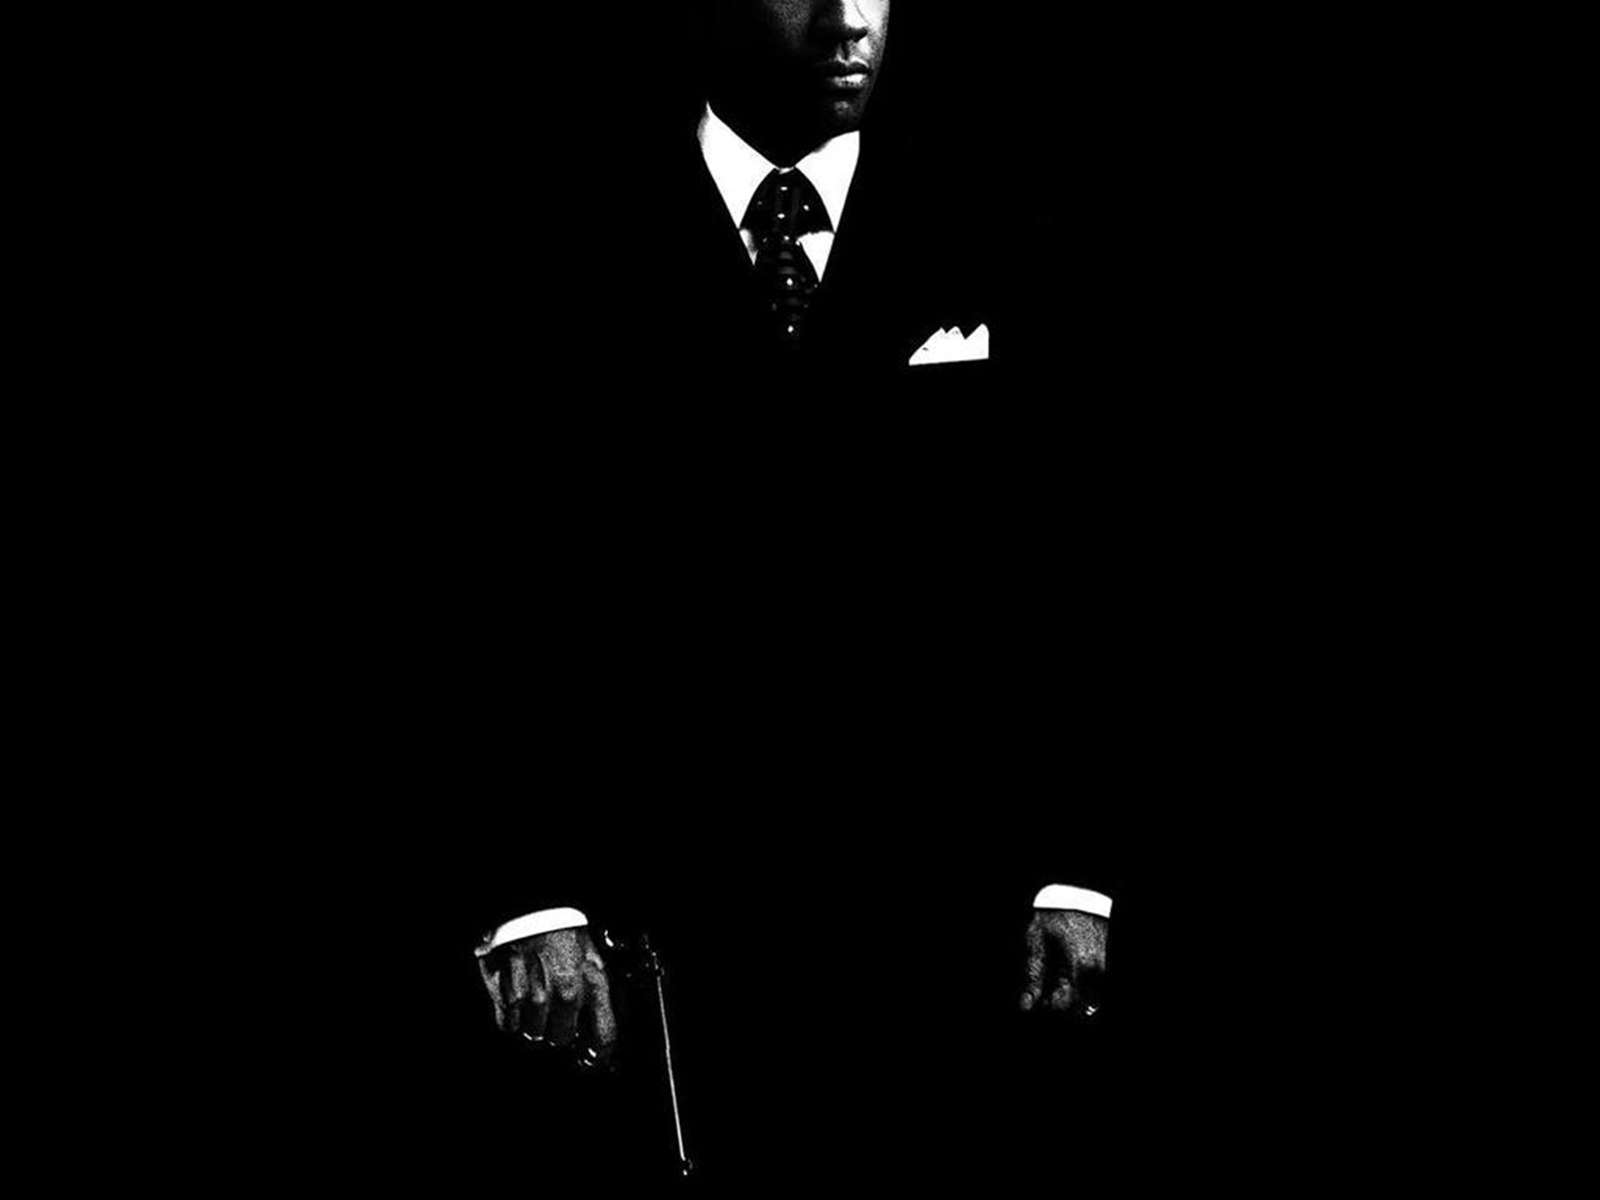 gentleman wallpaper,black,darkness,monochrome photography,black and white,monochrome